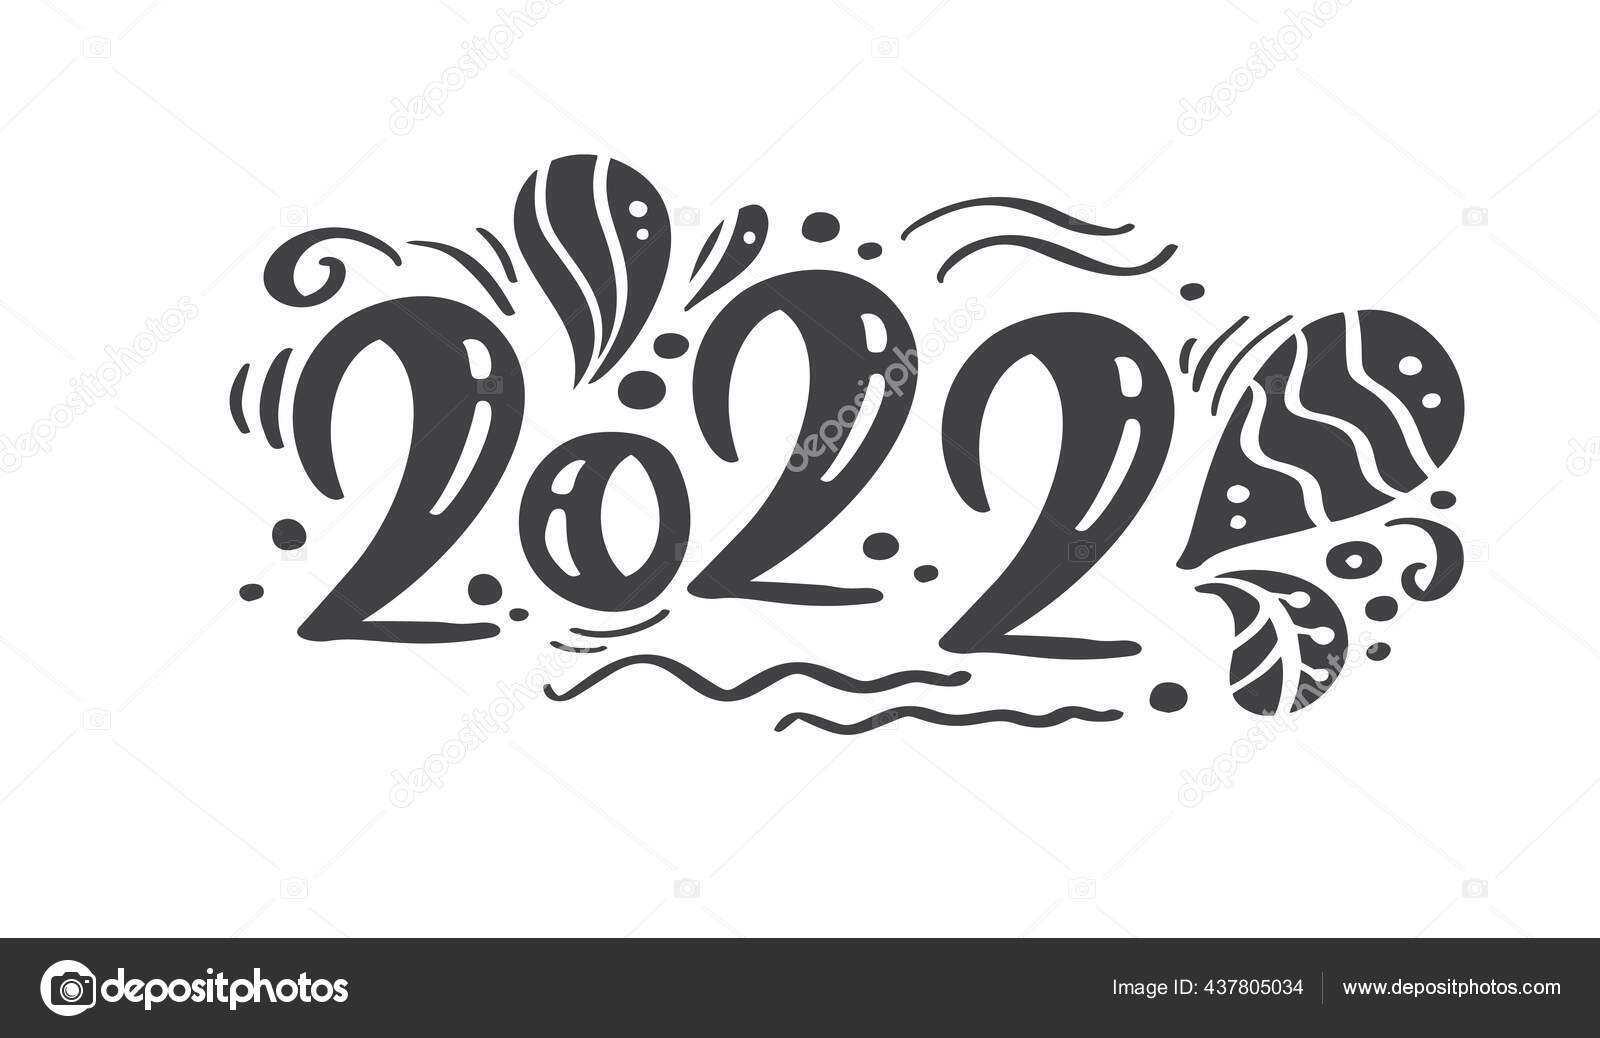 Happy new year 2022 Vector Art Stock Images | Depositphotos